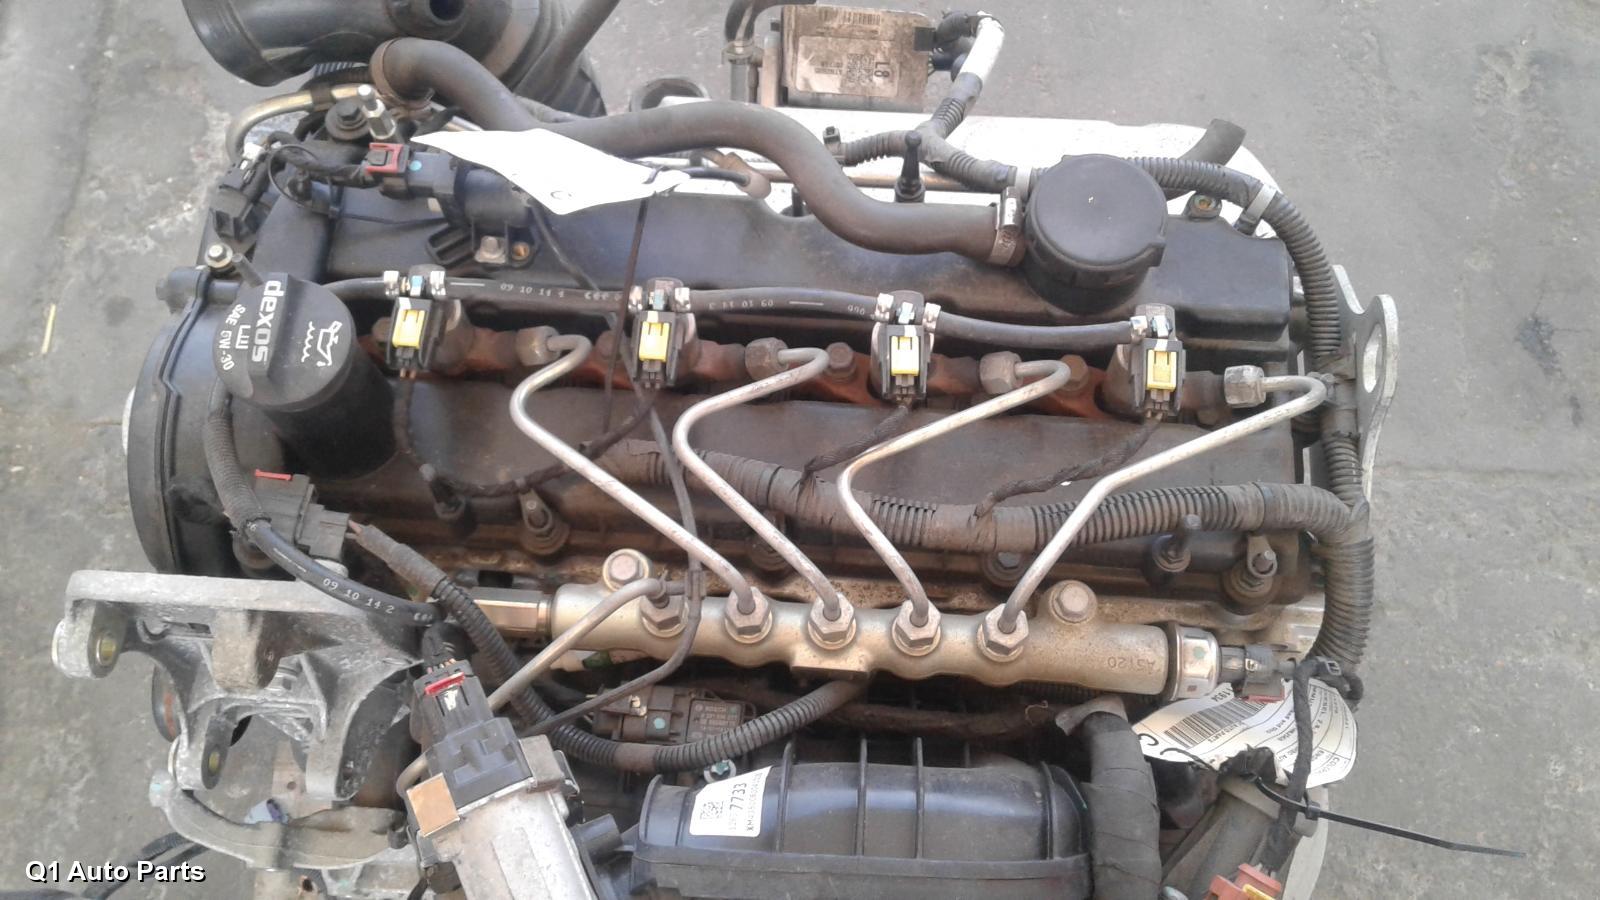 Holden Engines